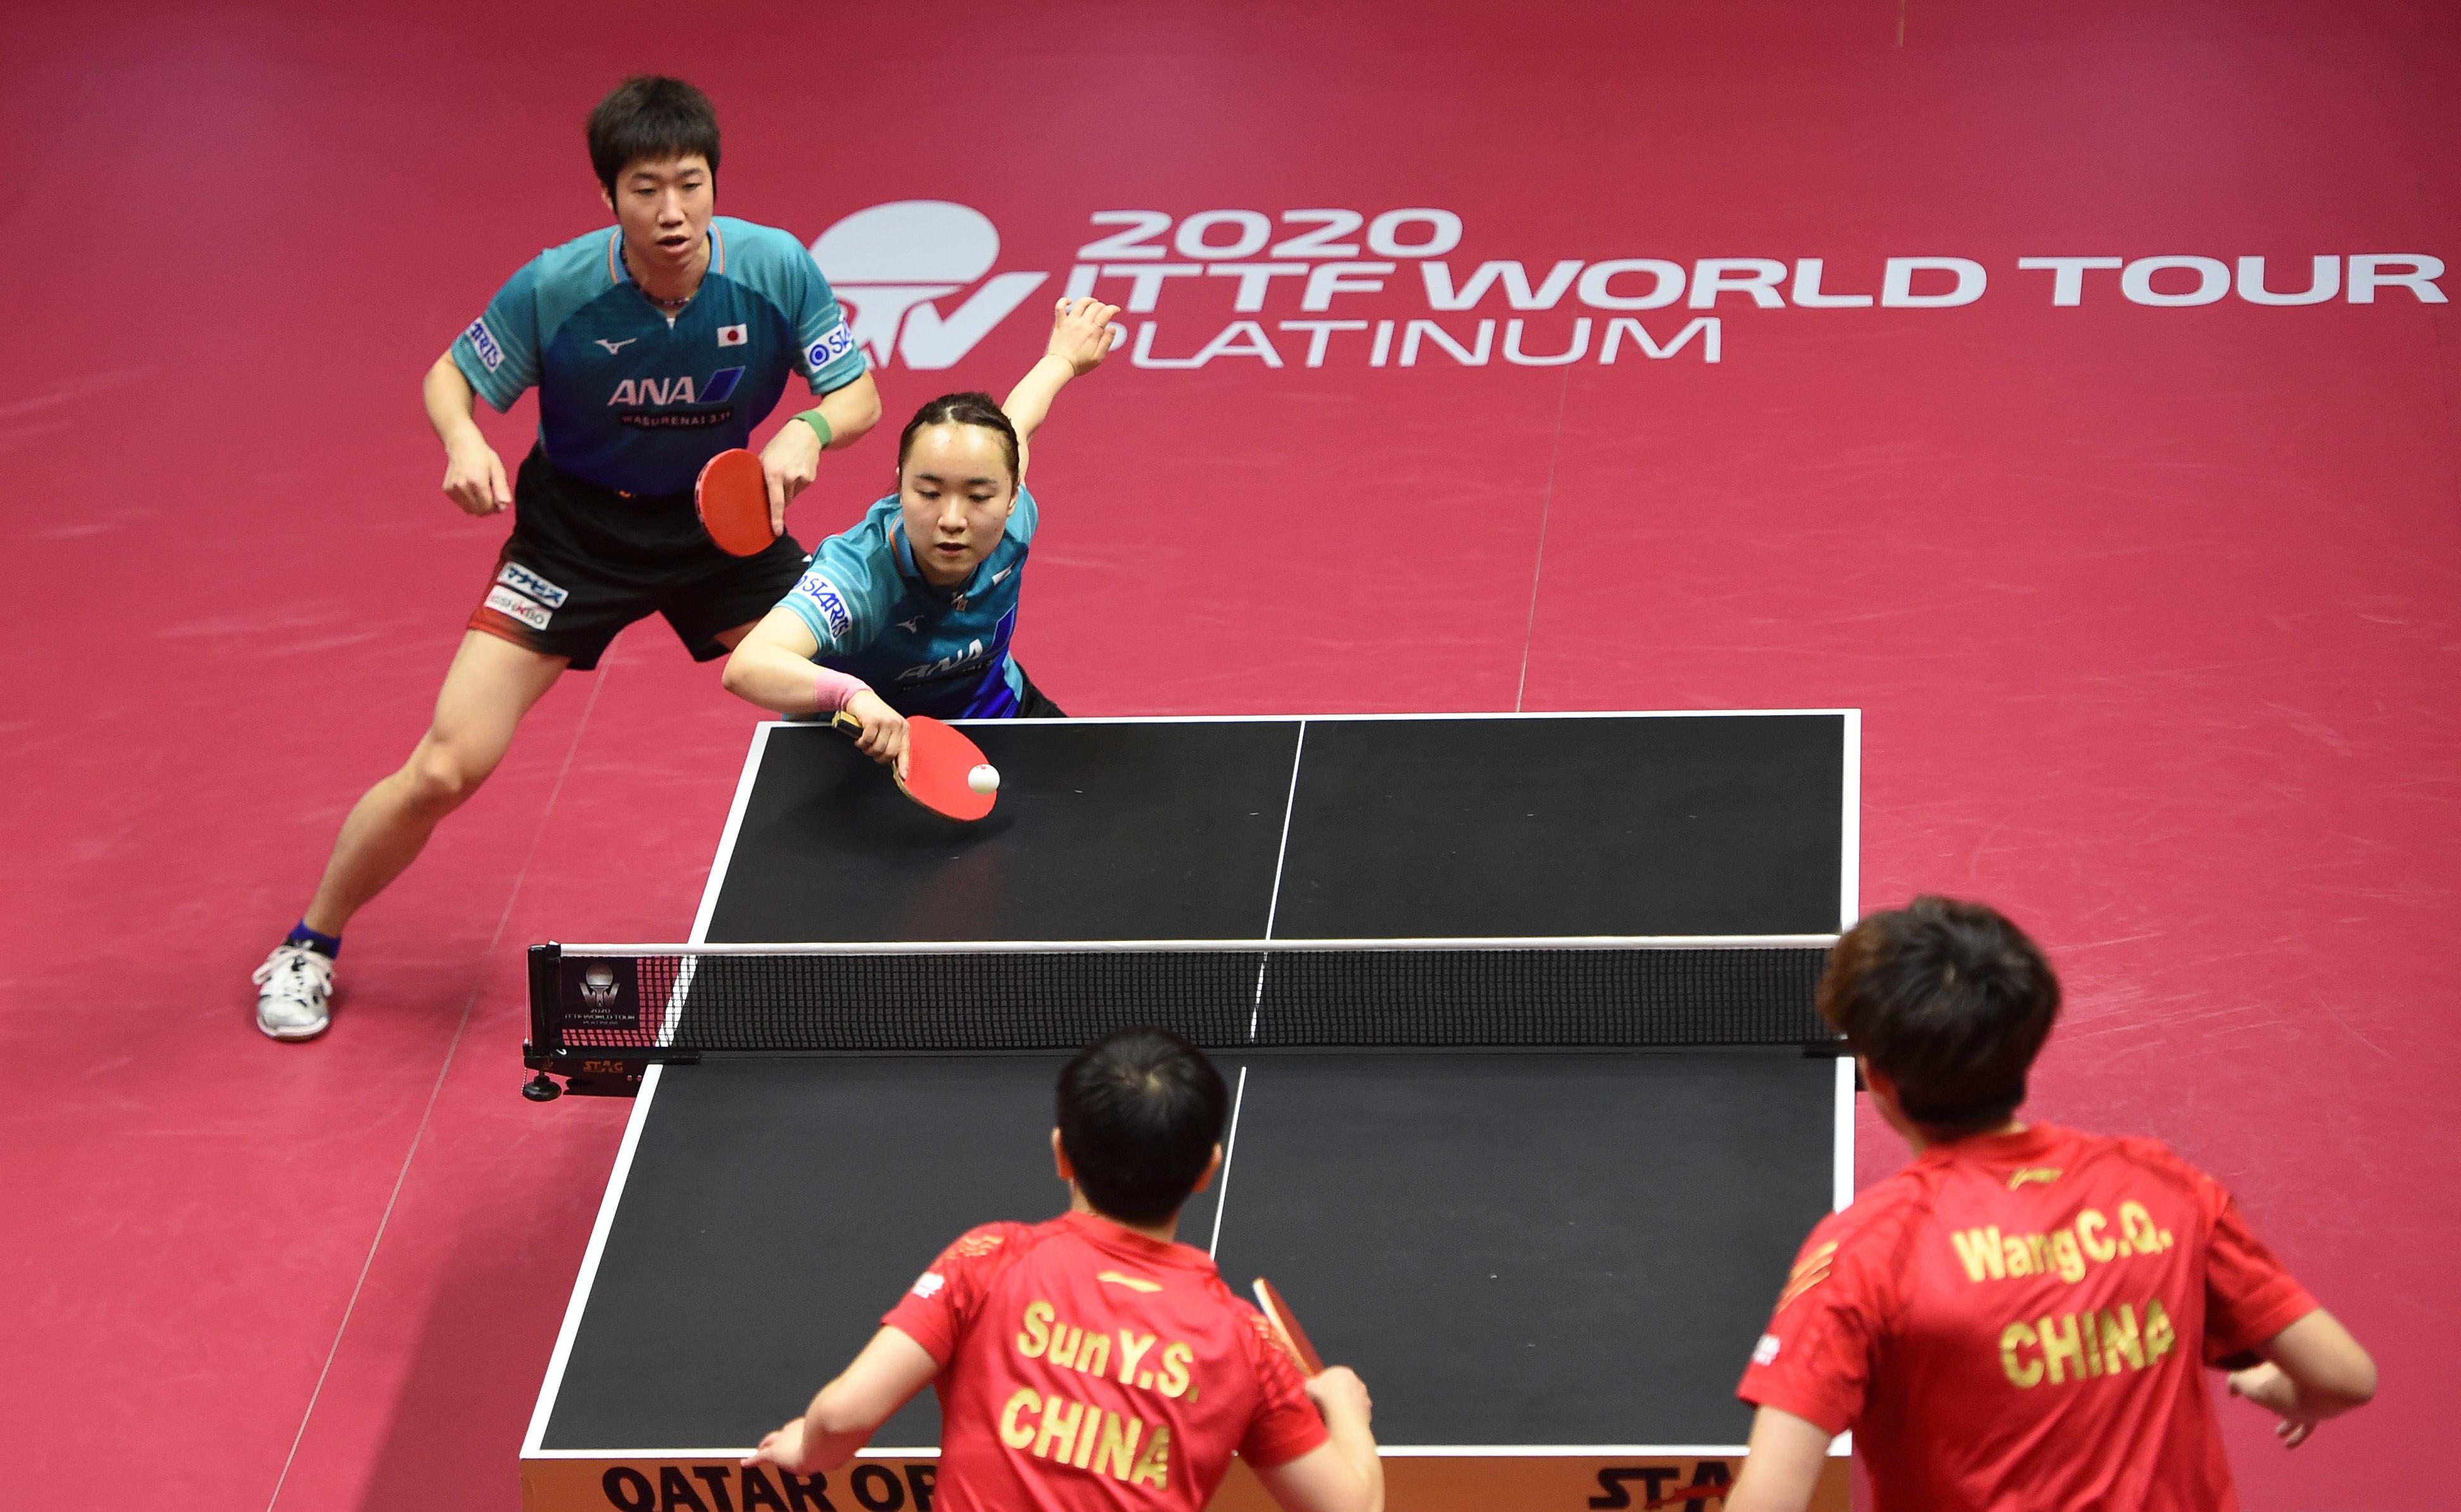 World Table Tennis announces 2021 event